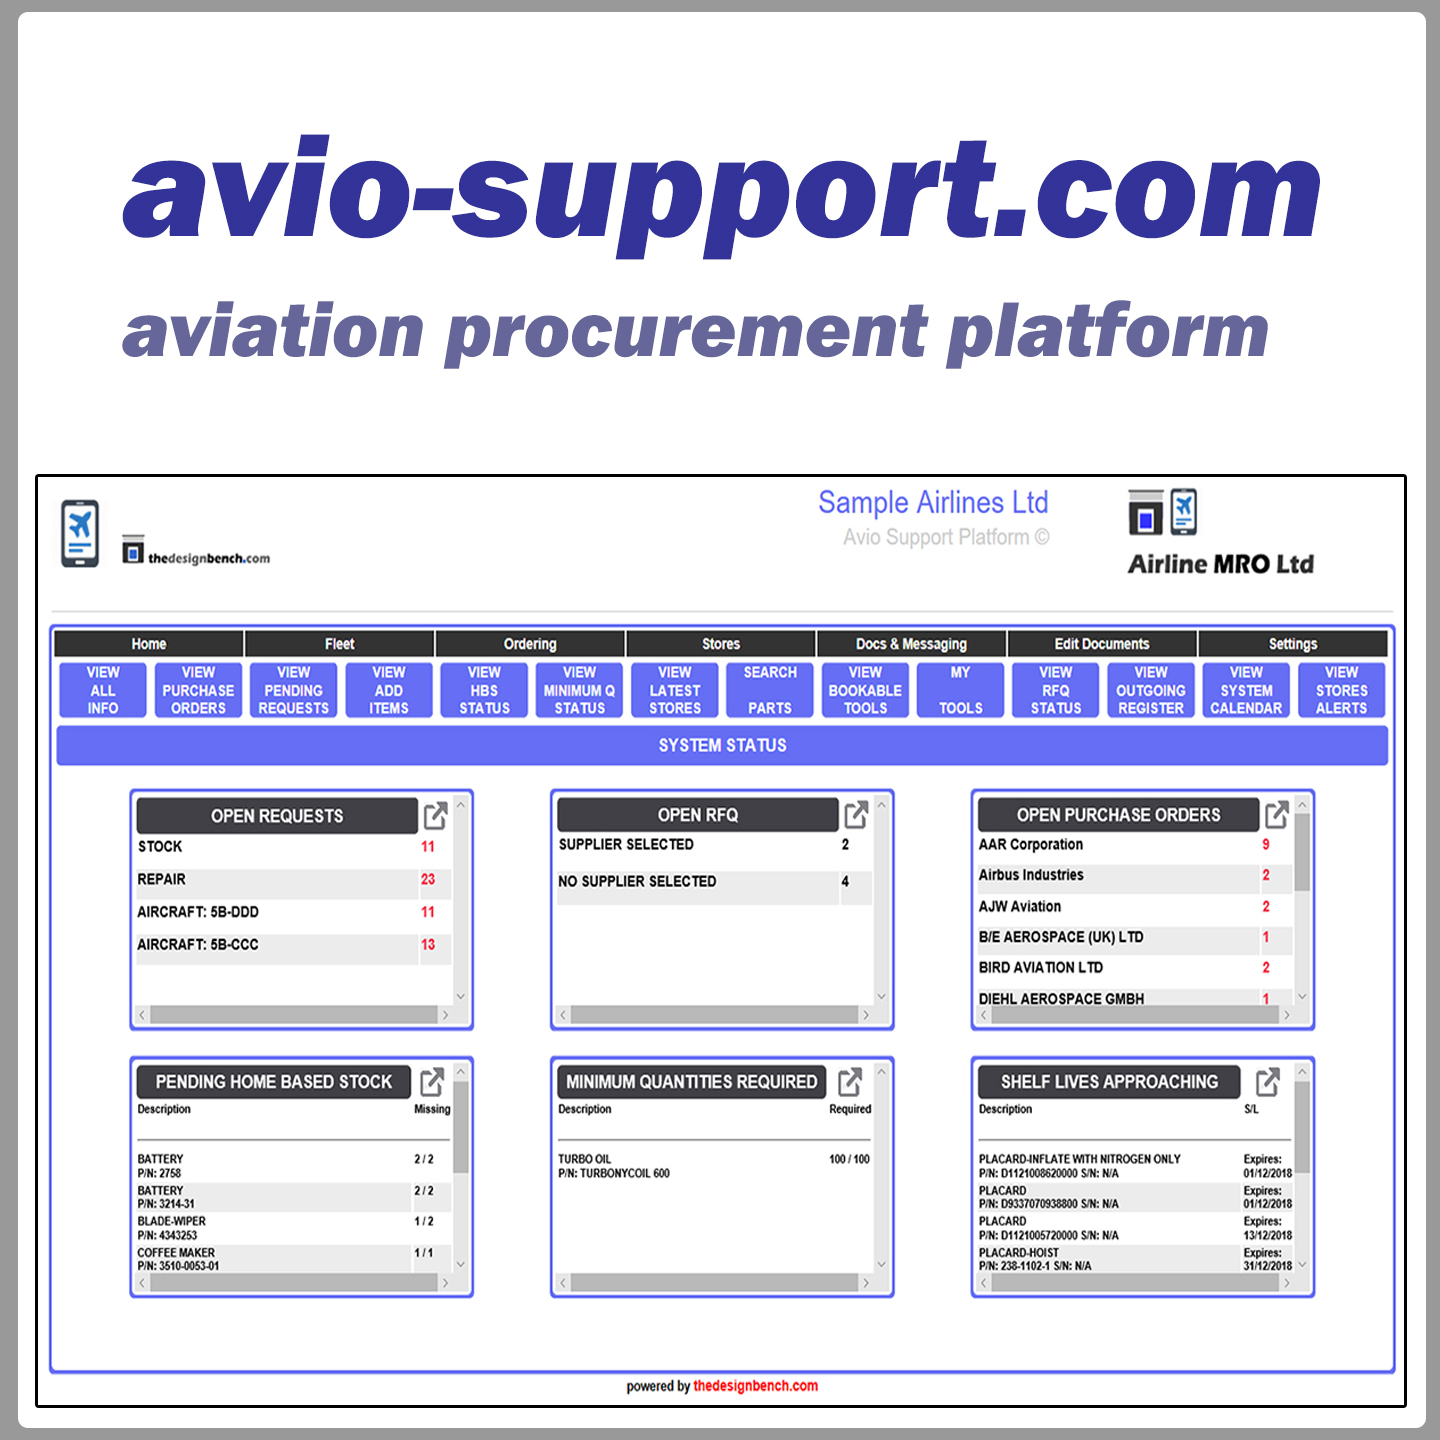 avio-support.com